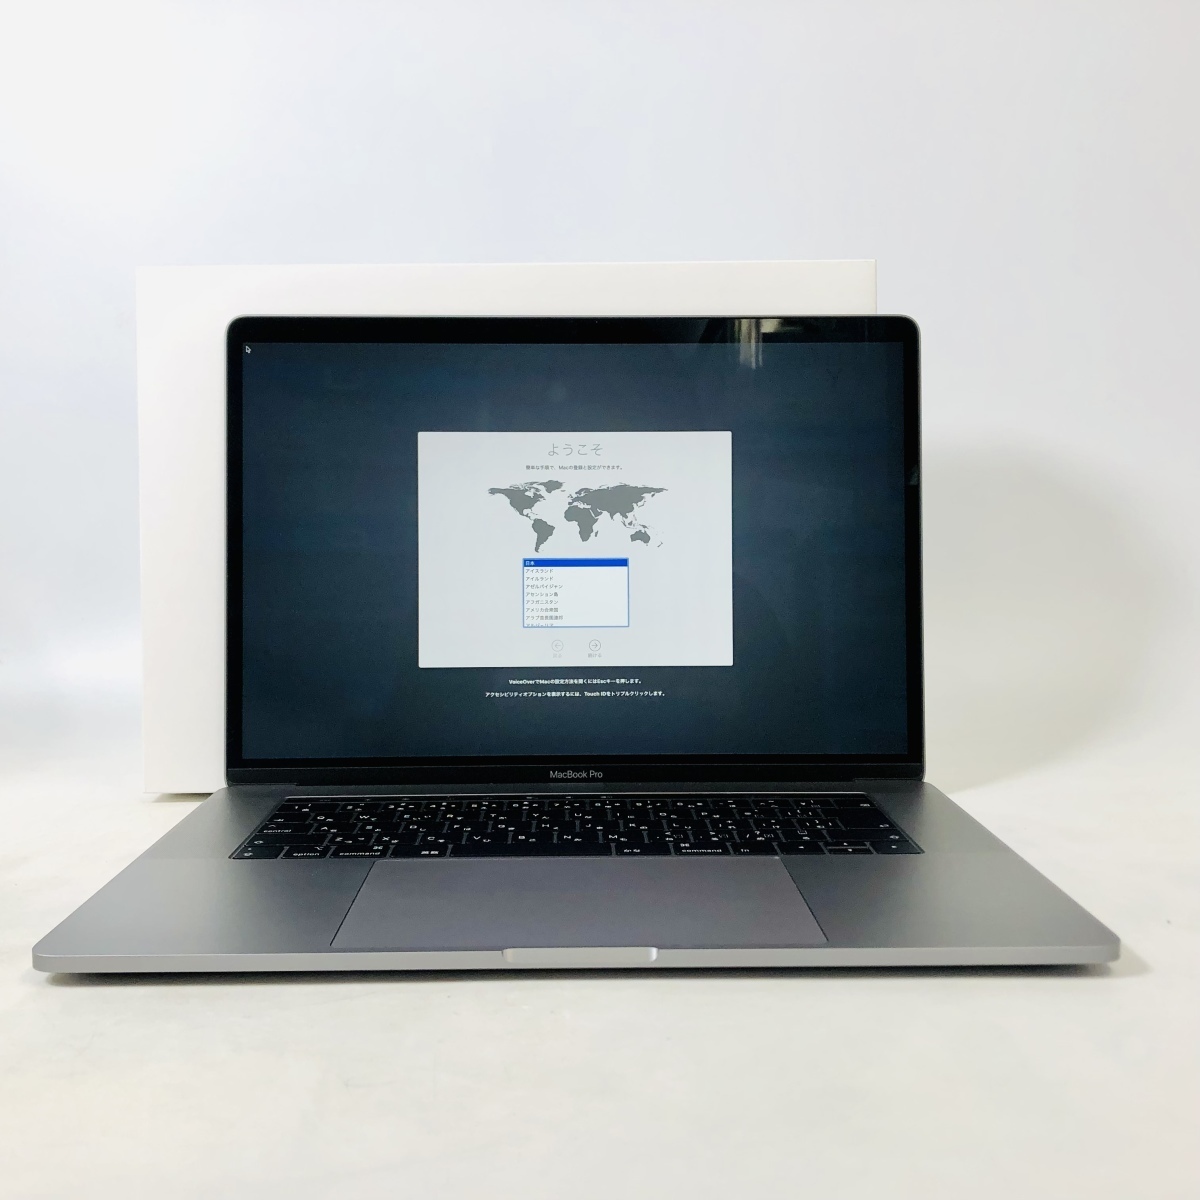 Apple MacBook Pro Retinaディスプレイ 2300/15.4 MV912J/A [スペース 